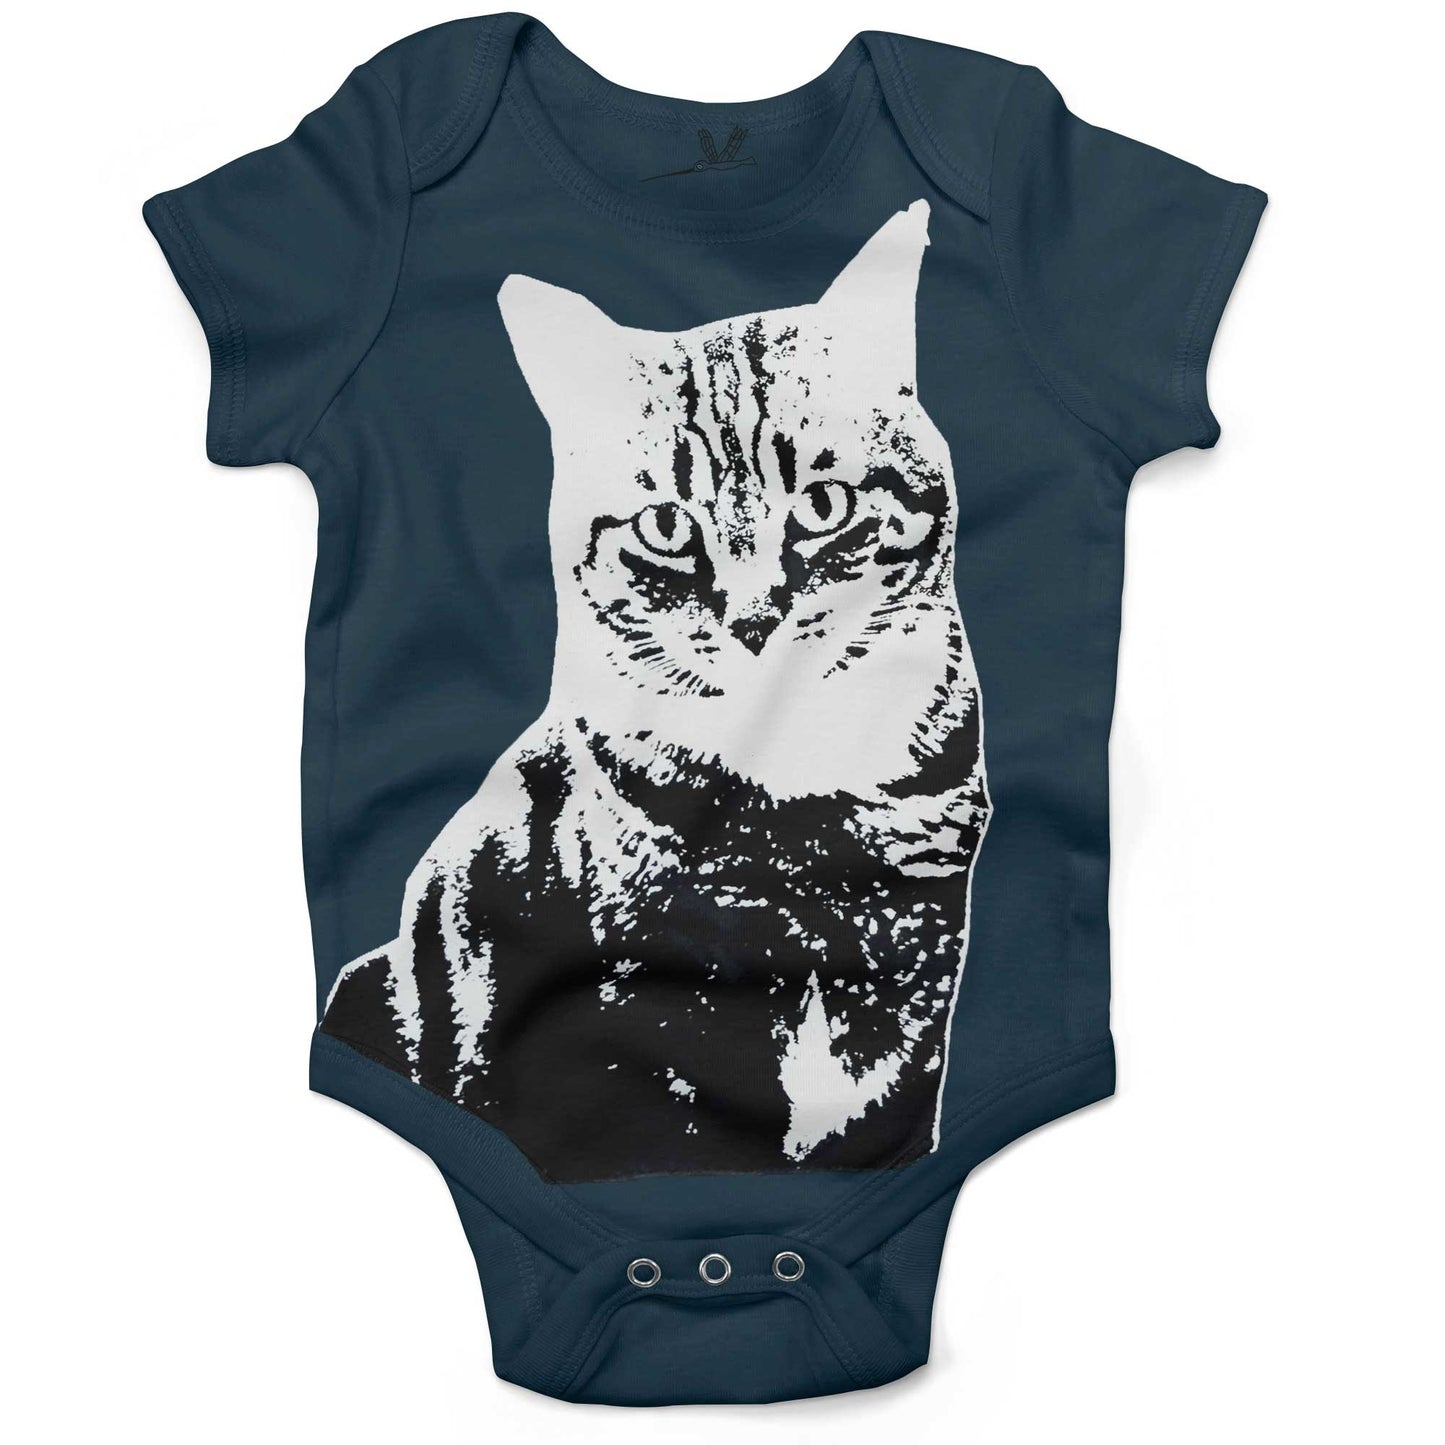 Black & White Cat Infant Bodysuit or Raglan Baby Tee-Organic Pacific Blue-3-6 months